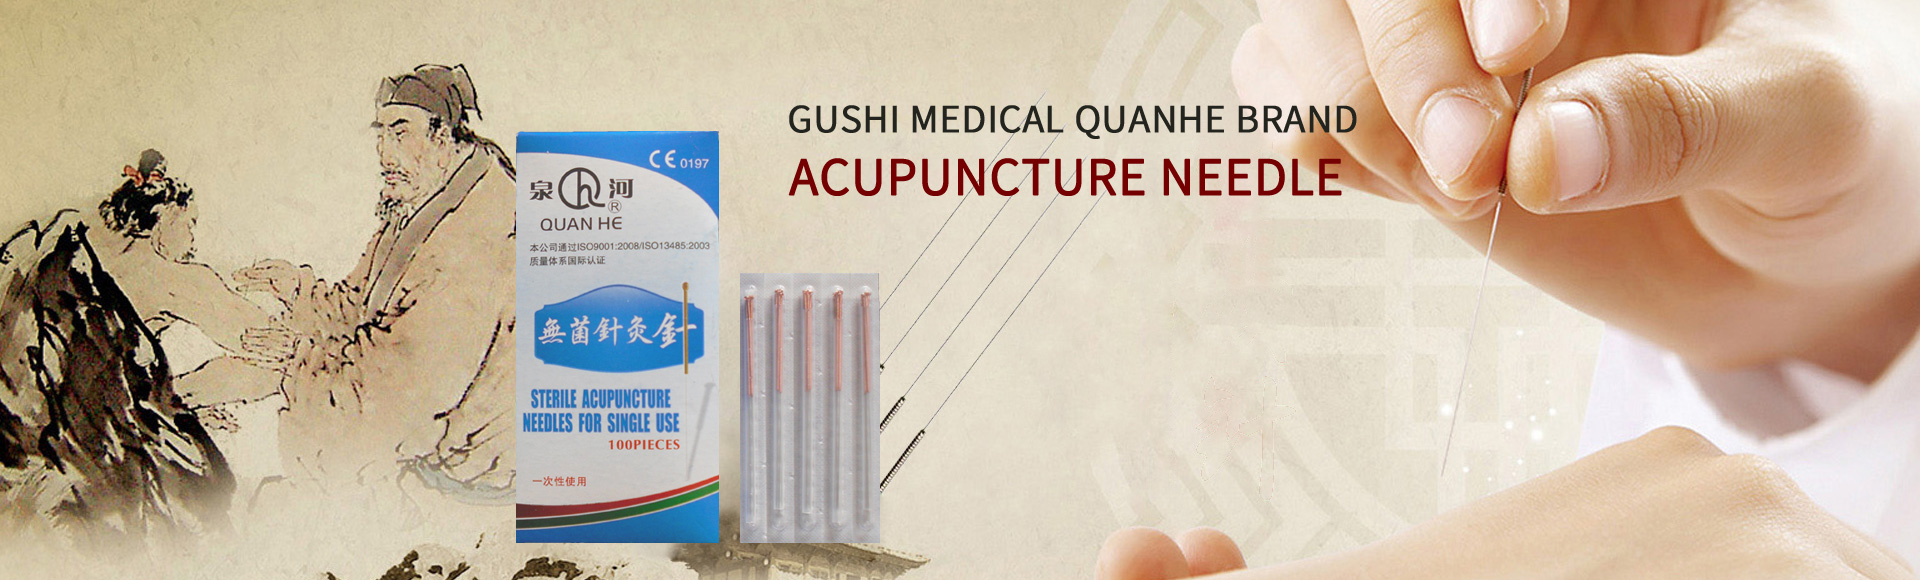 Gushi medical equipment